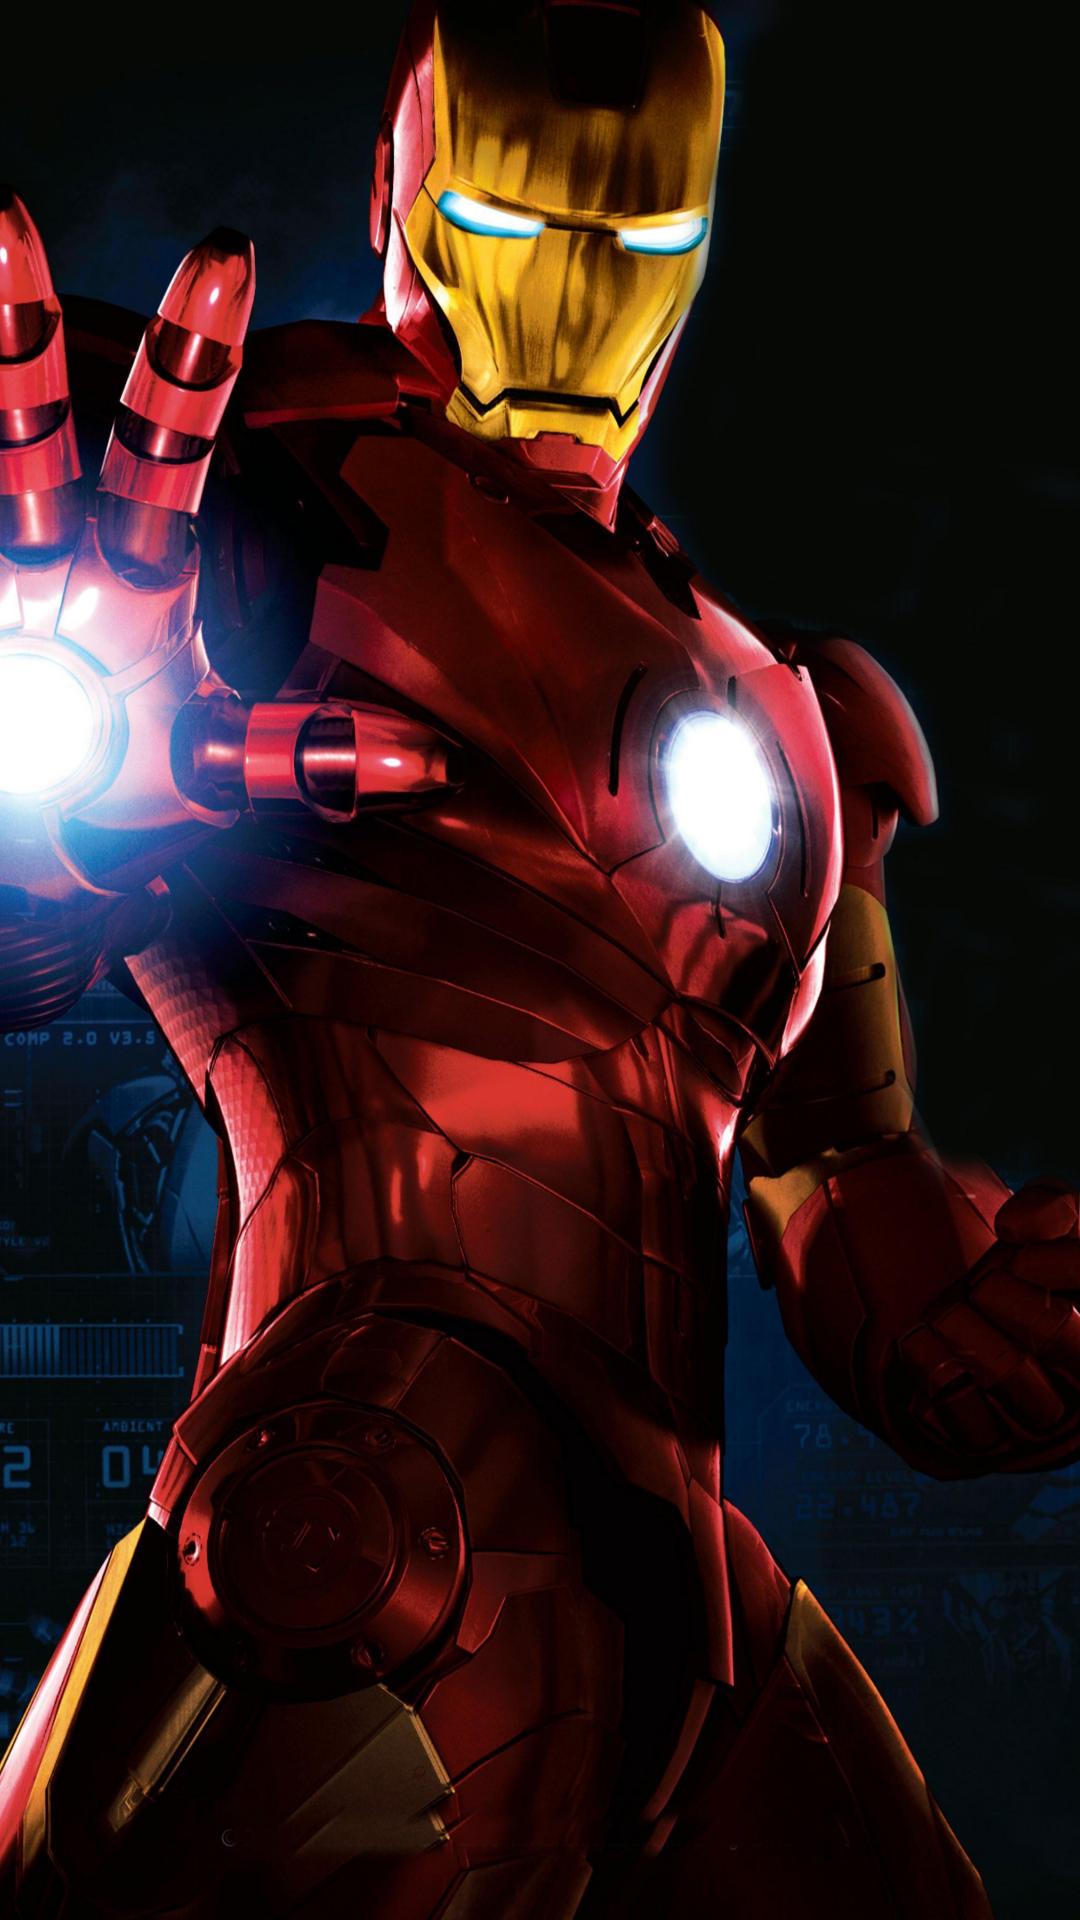 SuperHD.pics Arc reactor Iron Man Tony Stark armor artwork